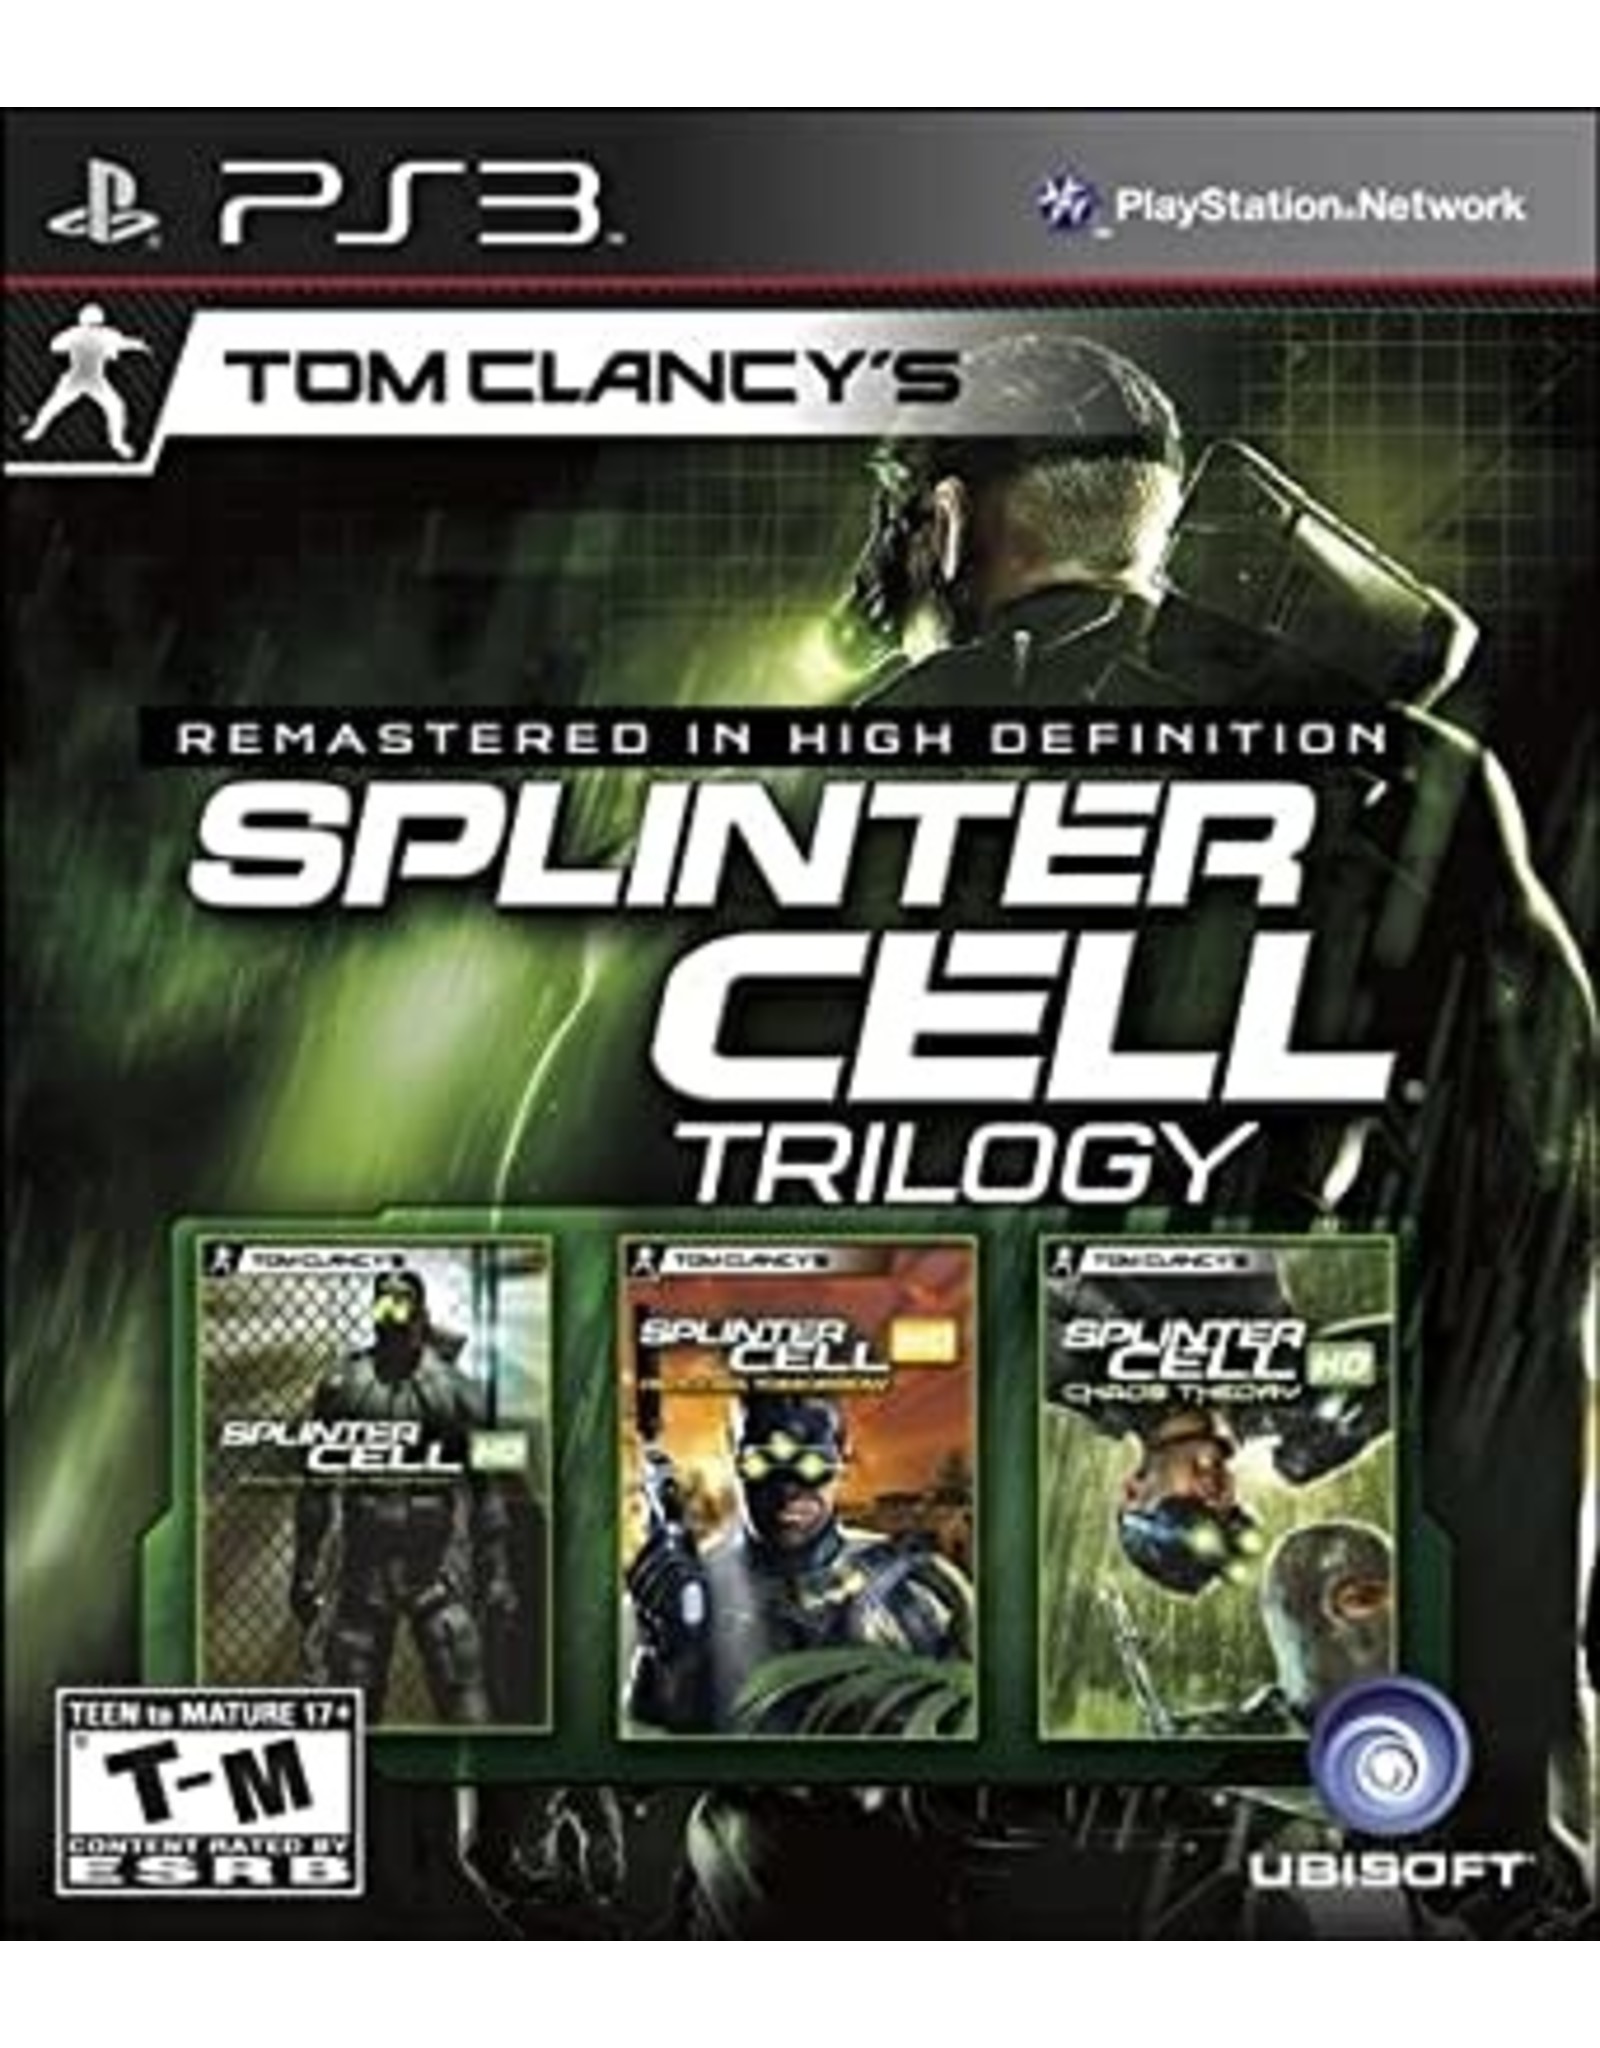 Playstation 3 Splinter Cell Classic Trilogy HD (Brand New)